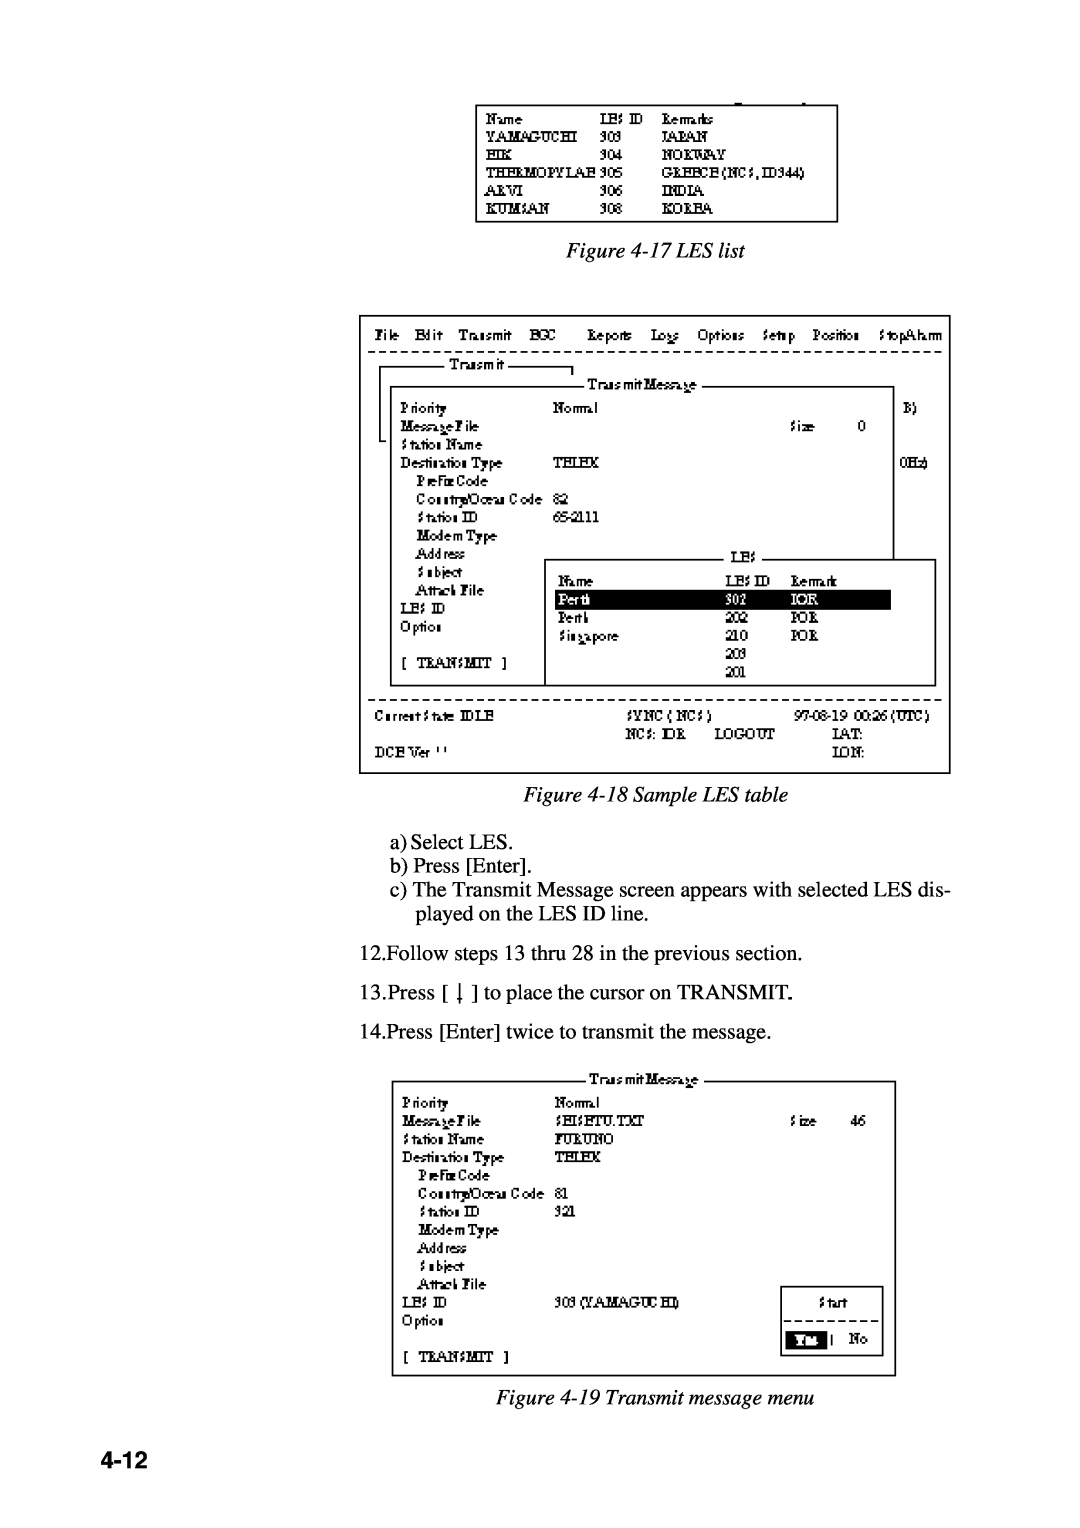 Furuno RC-1500-1T manual 4-12, 17 LES list -18 Sample LES table, a Select LES b Press Enter, 19 Transmit message menu 